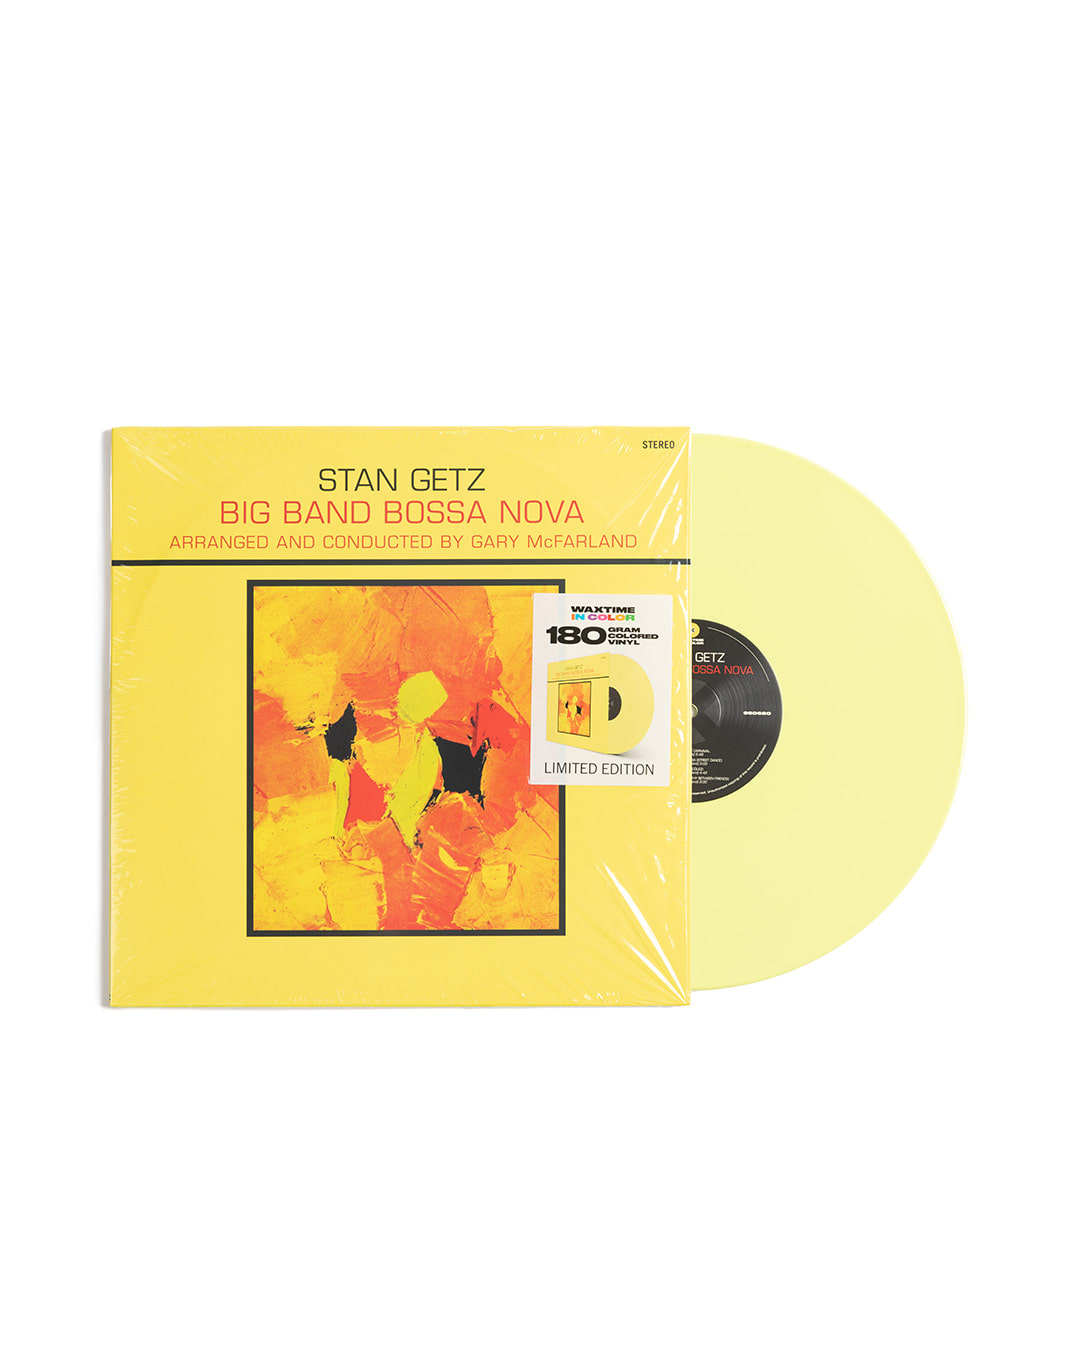 STAN GETZ - BIG BAND BOSSA NOVA + 1 BONUS TRACK (yellow disc)